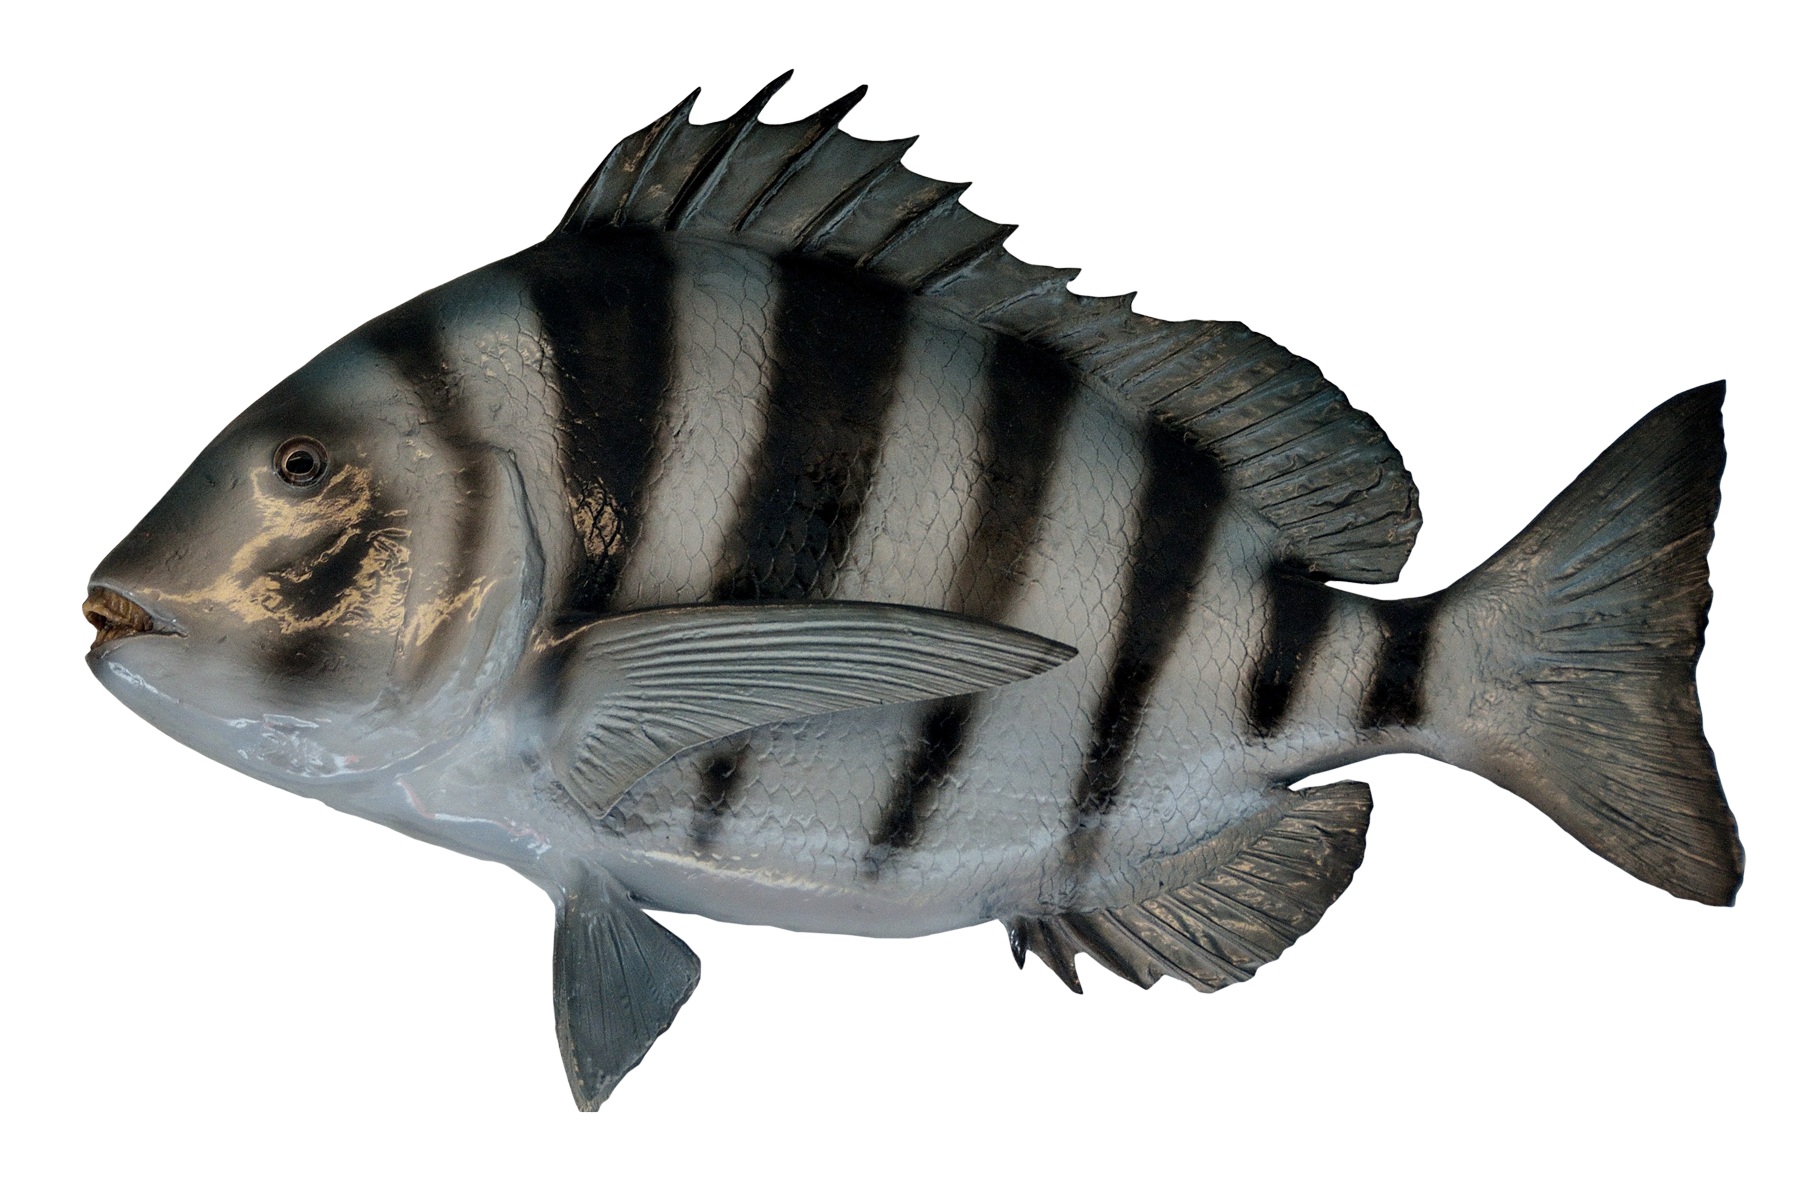 transparent fish png